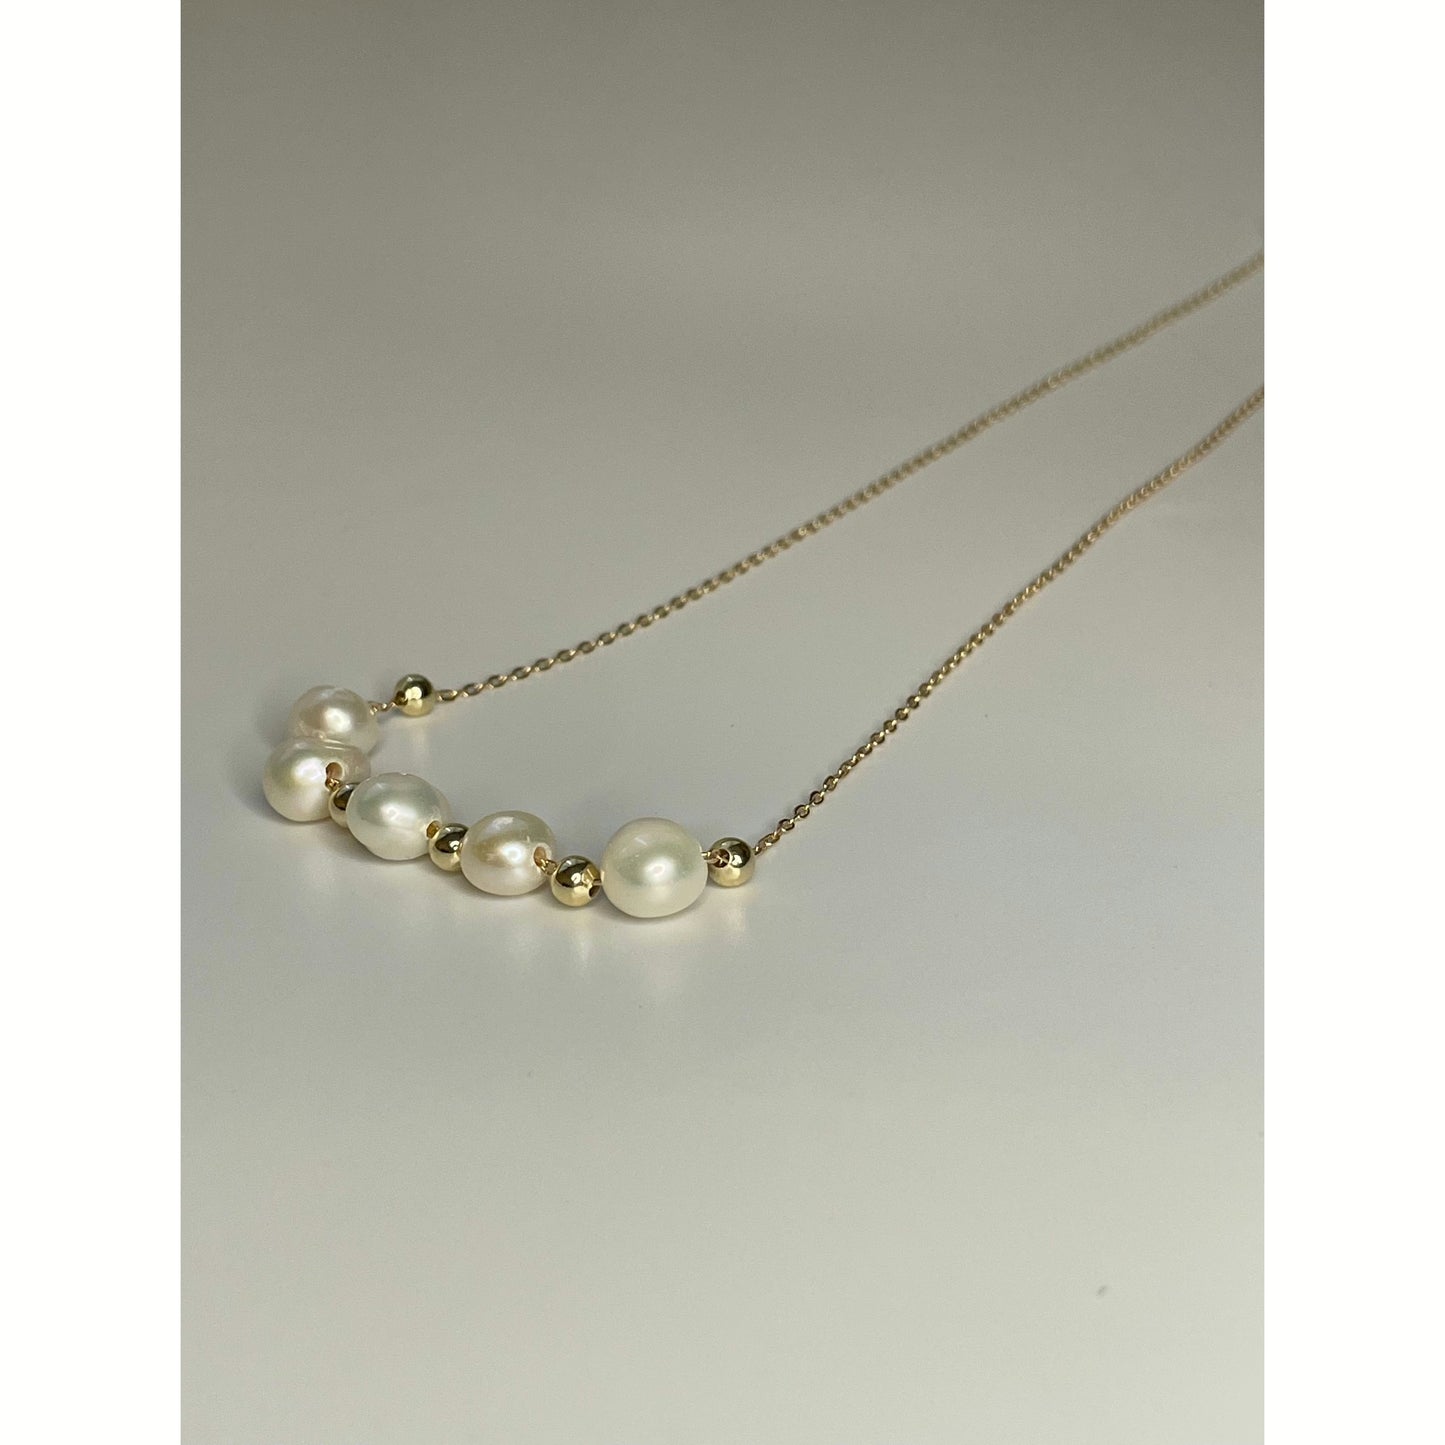 Paula pearl necklace